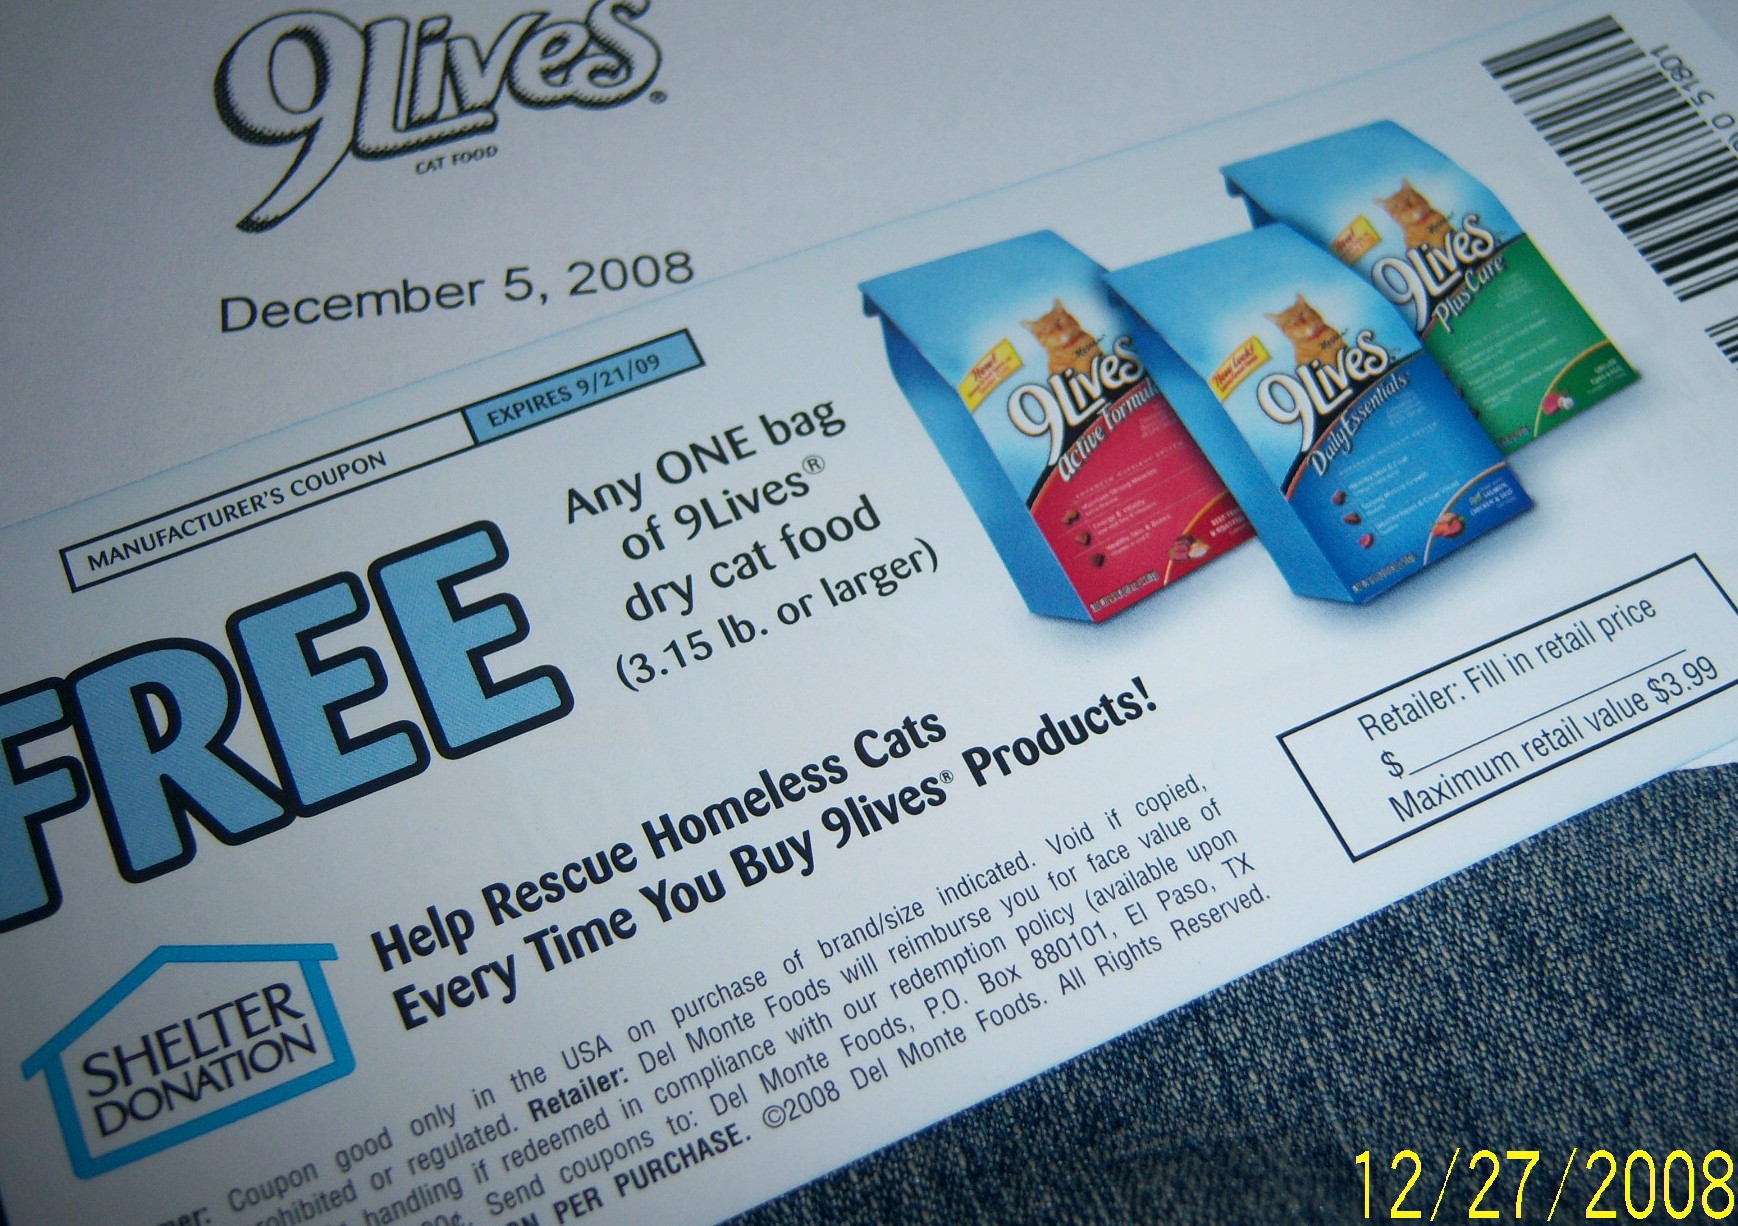 Free 3.15 lb bag of 9Lives dry cat food coupon